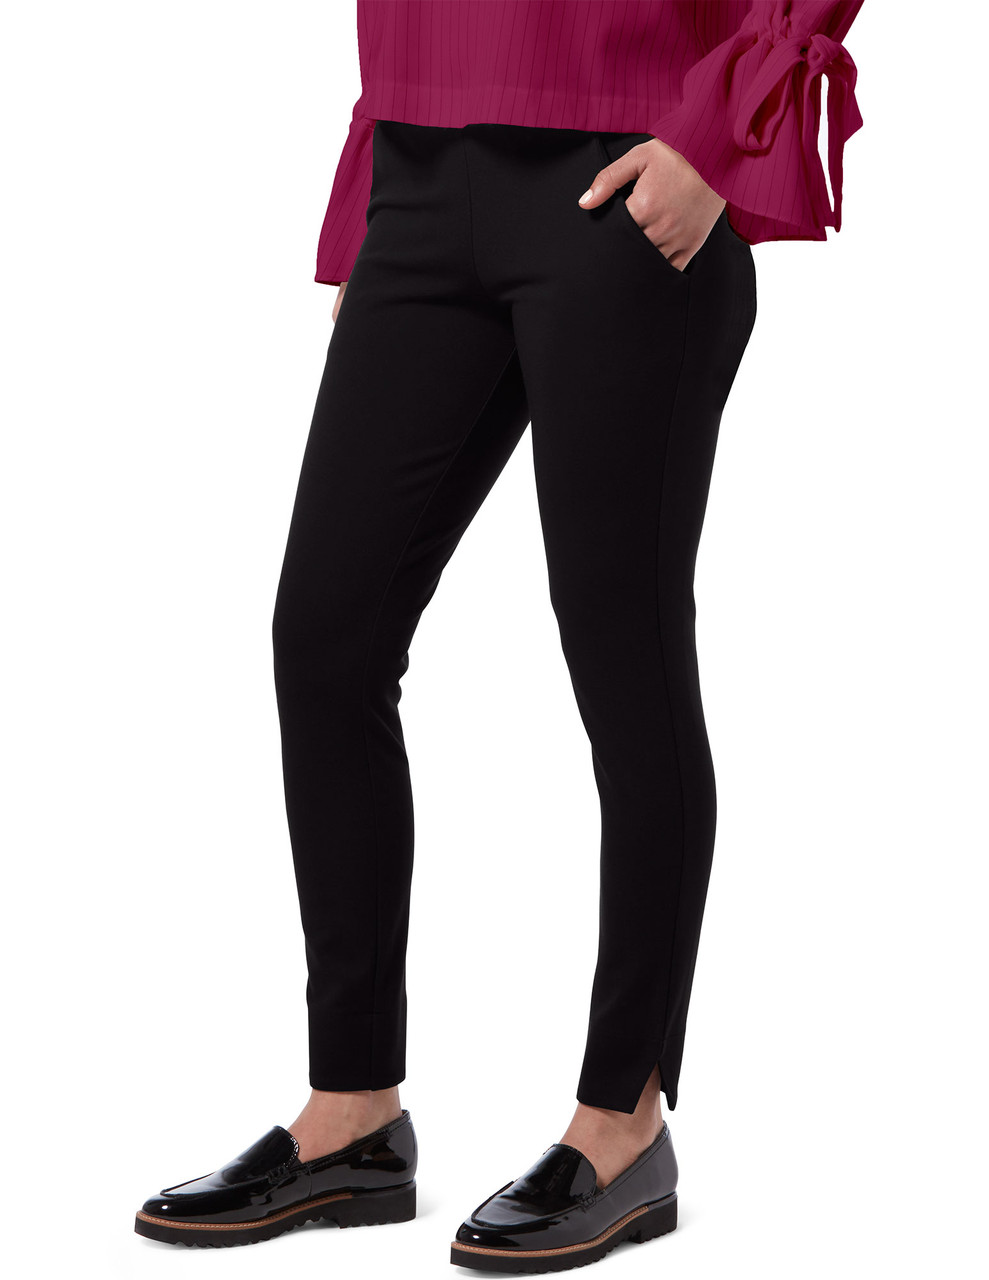 Hue leggings plus size front pocket knit high rise skimmer black